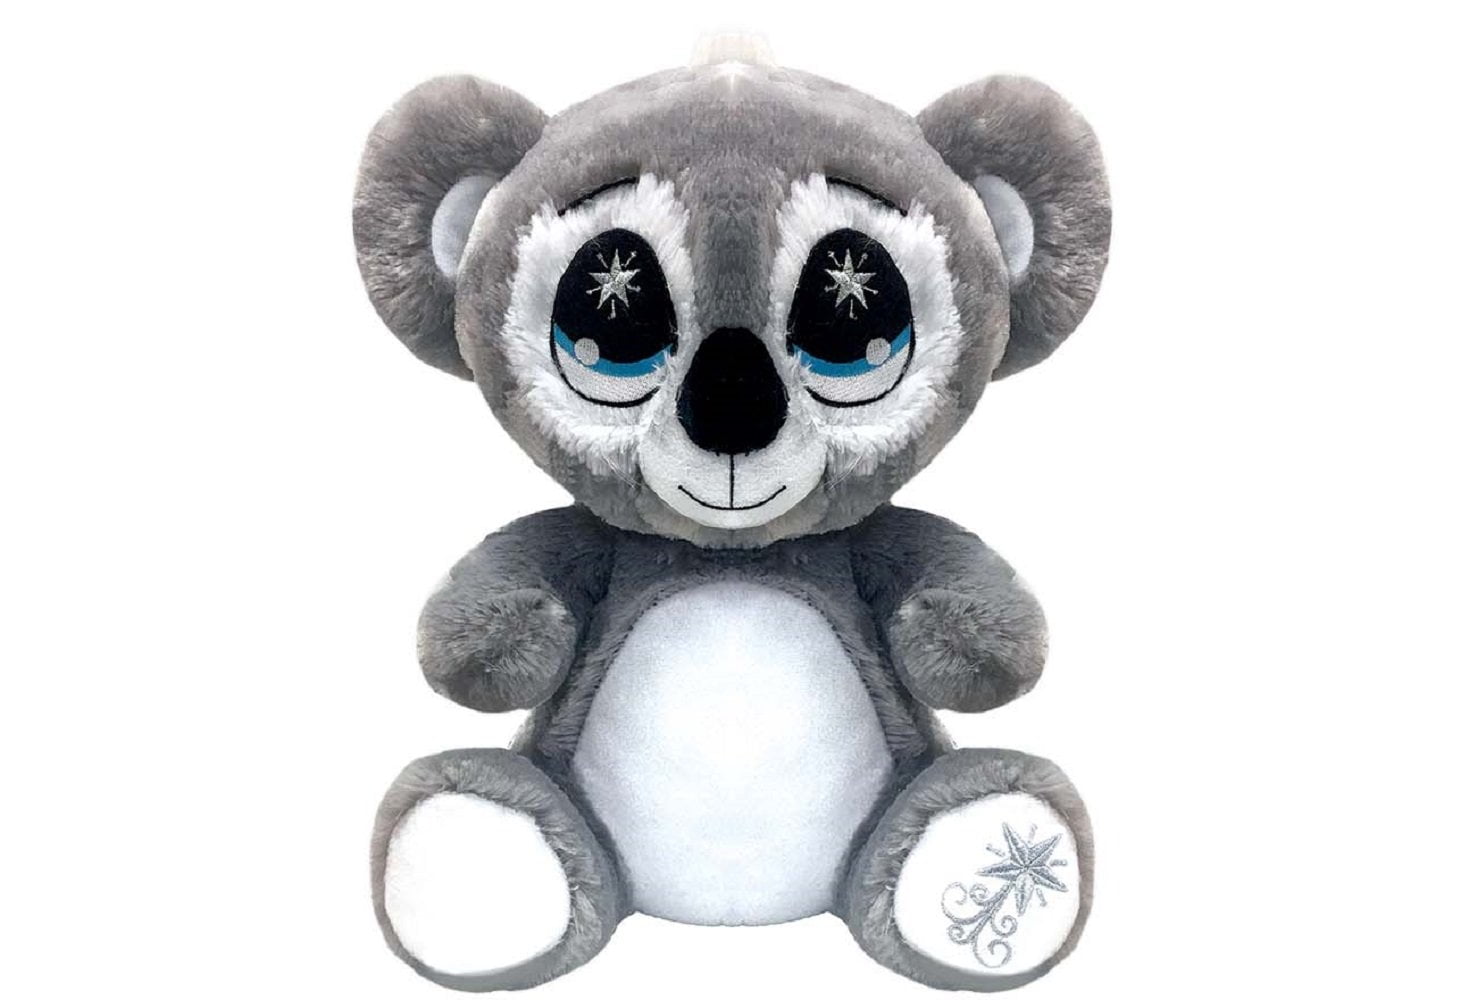 Peek A Boo Toys Kozy The Koala Stuffed Animal Plush Toy Gift |Grey Soft 15  Kozy The Koala 